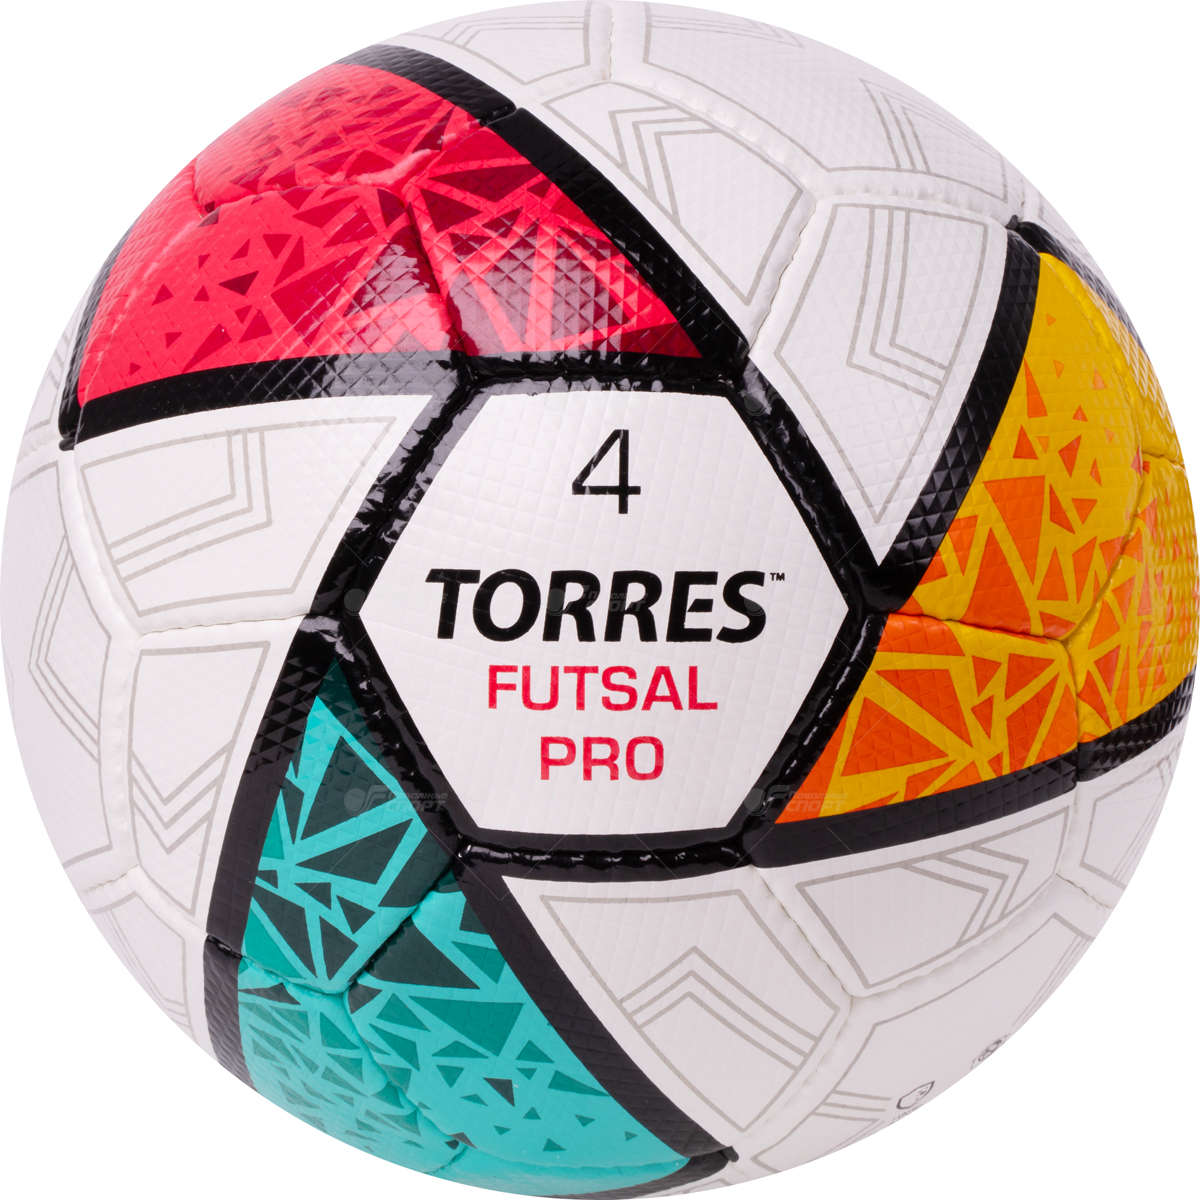 Мяч ф/б Torres Futsal Pro (New) арт.FS323794 р.4